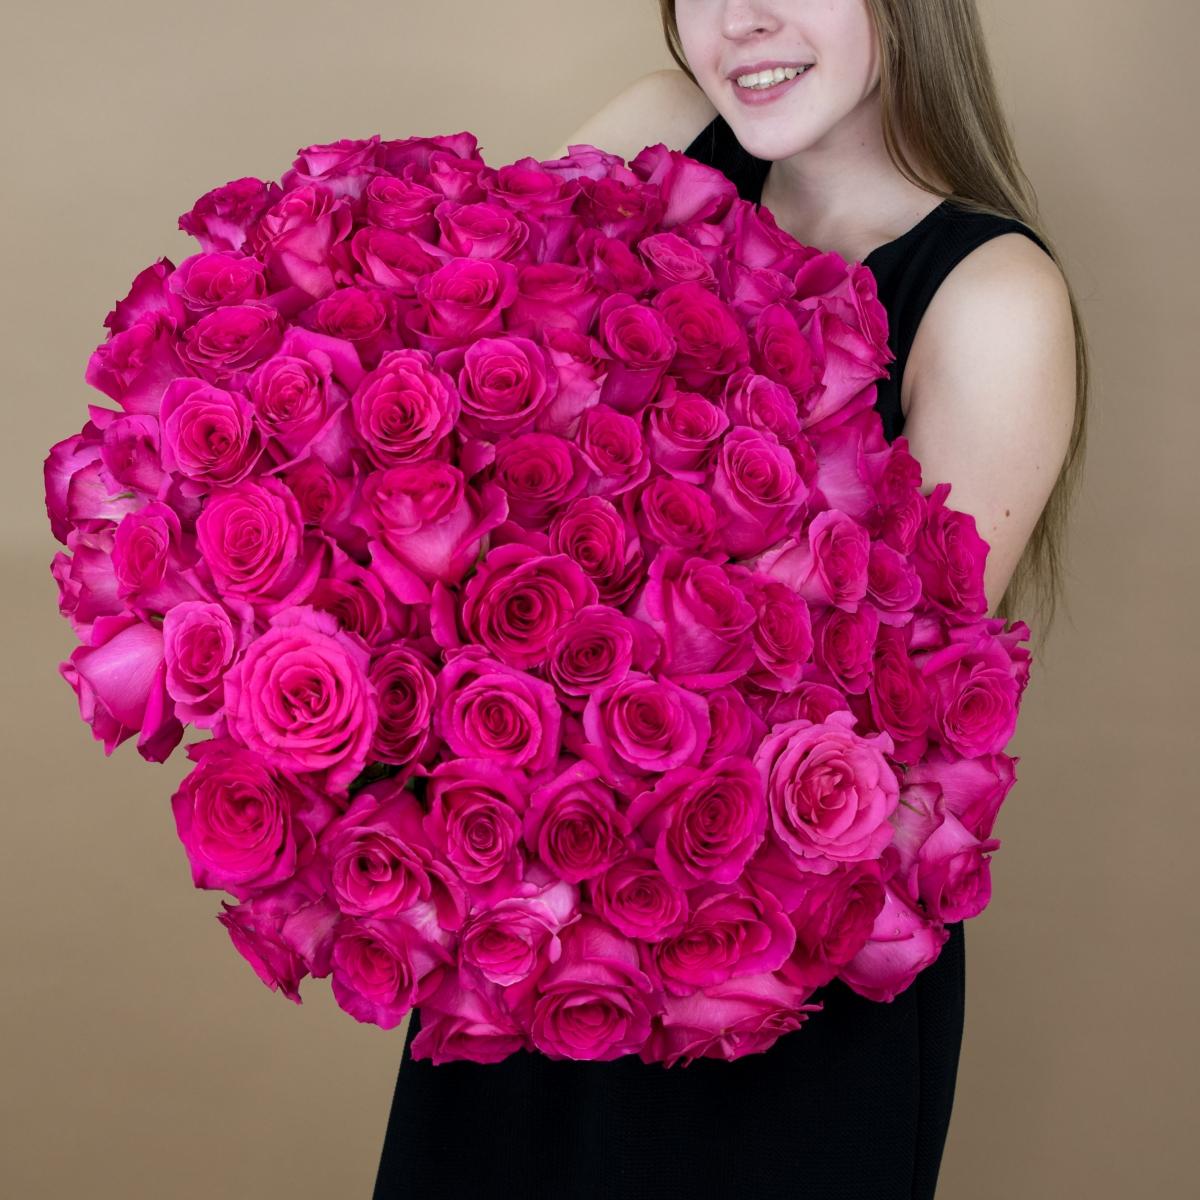 Букет из розовых роз 75 шт. (40 см) Артикул  9163